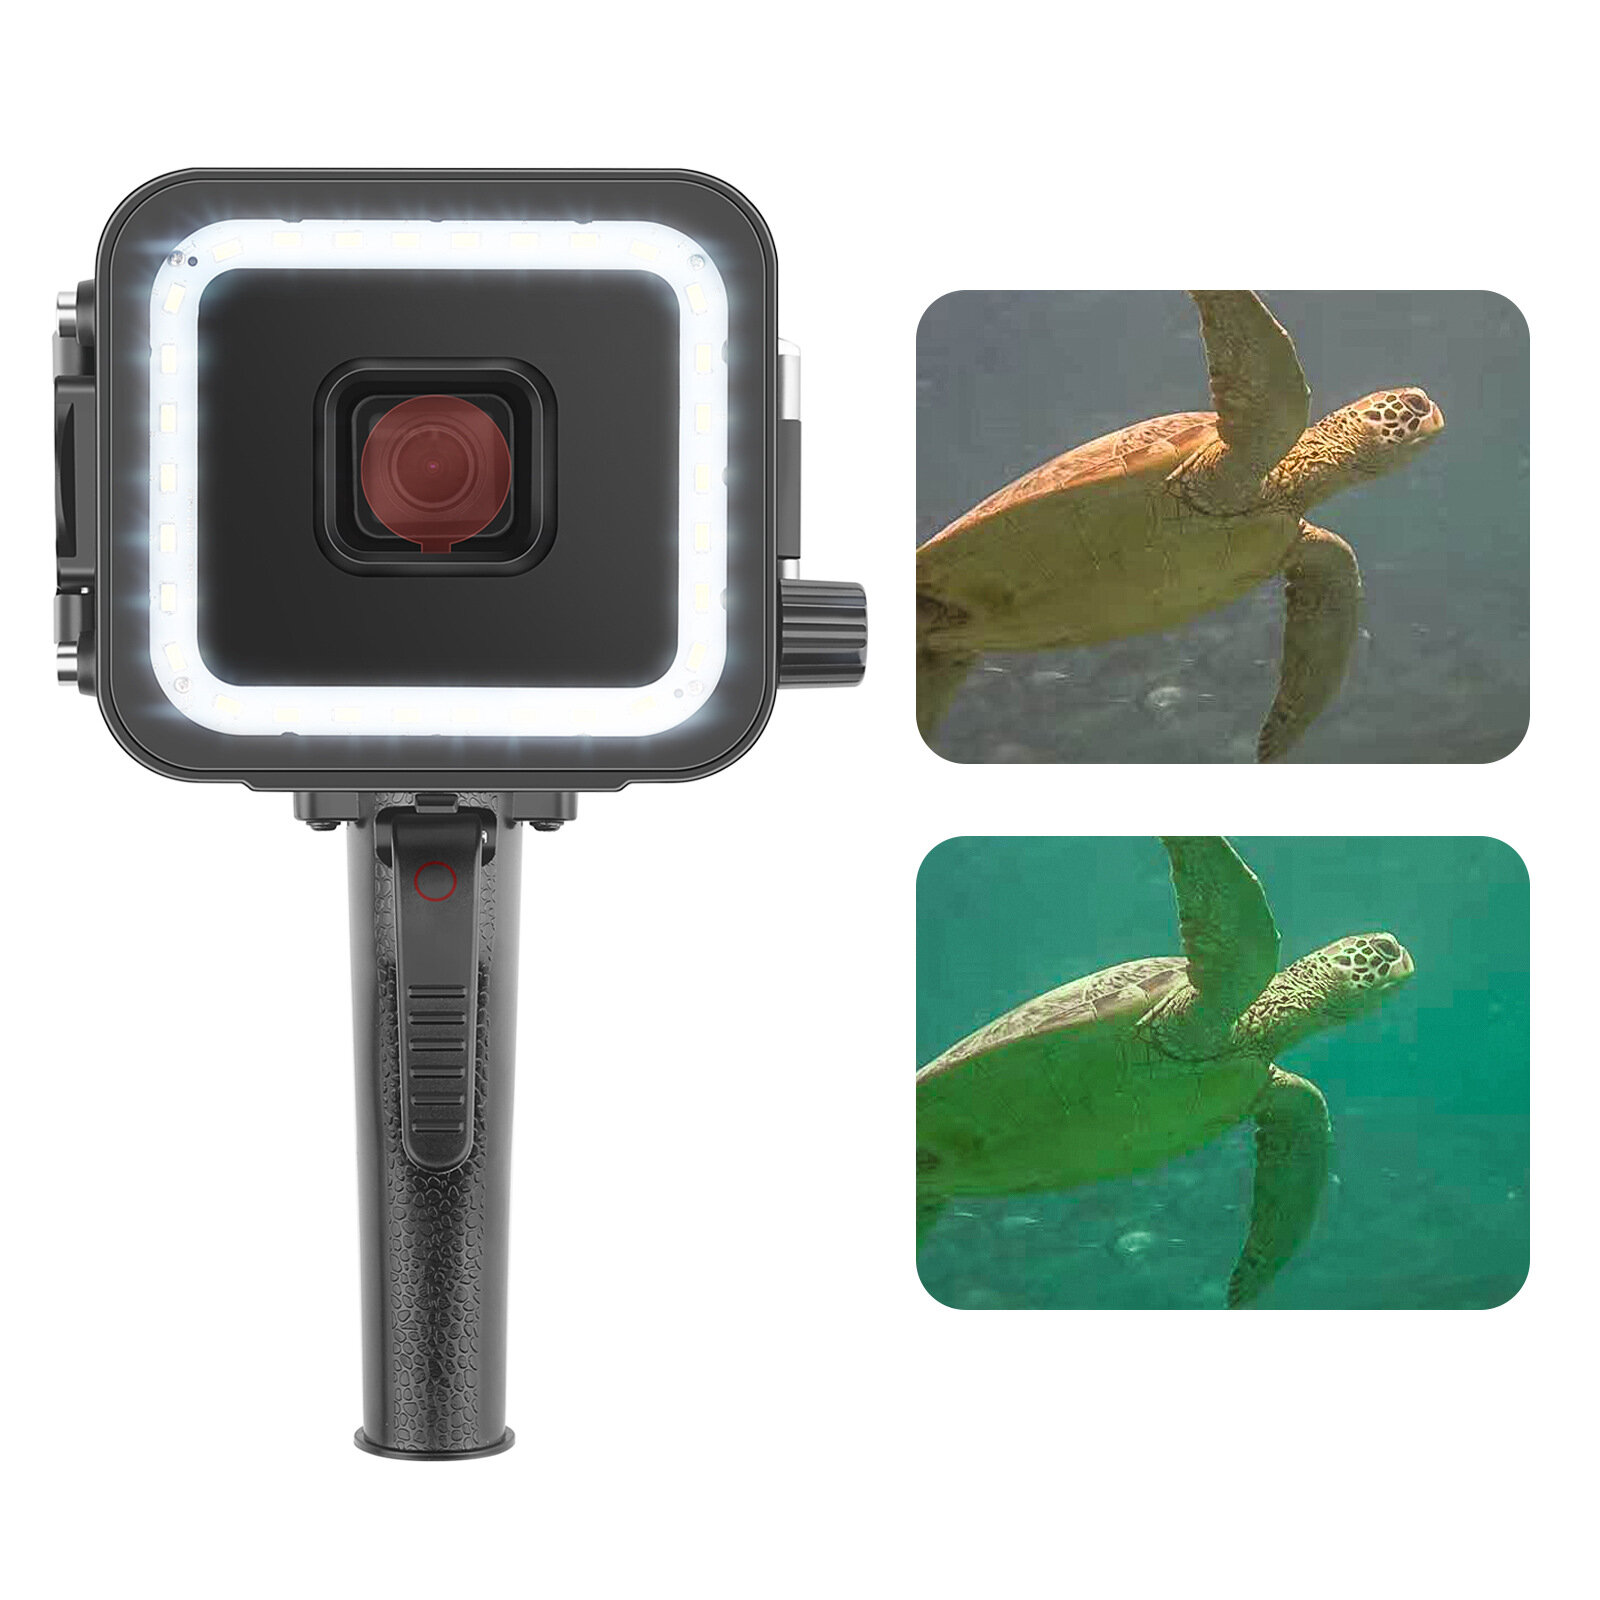 

SHOOT 40M LED Underwater Лампа Фонарь для дайвинга GoPro Hero 7 6 5 Black Video Flash Fill Lights Водонепроницаемы Чехол